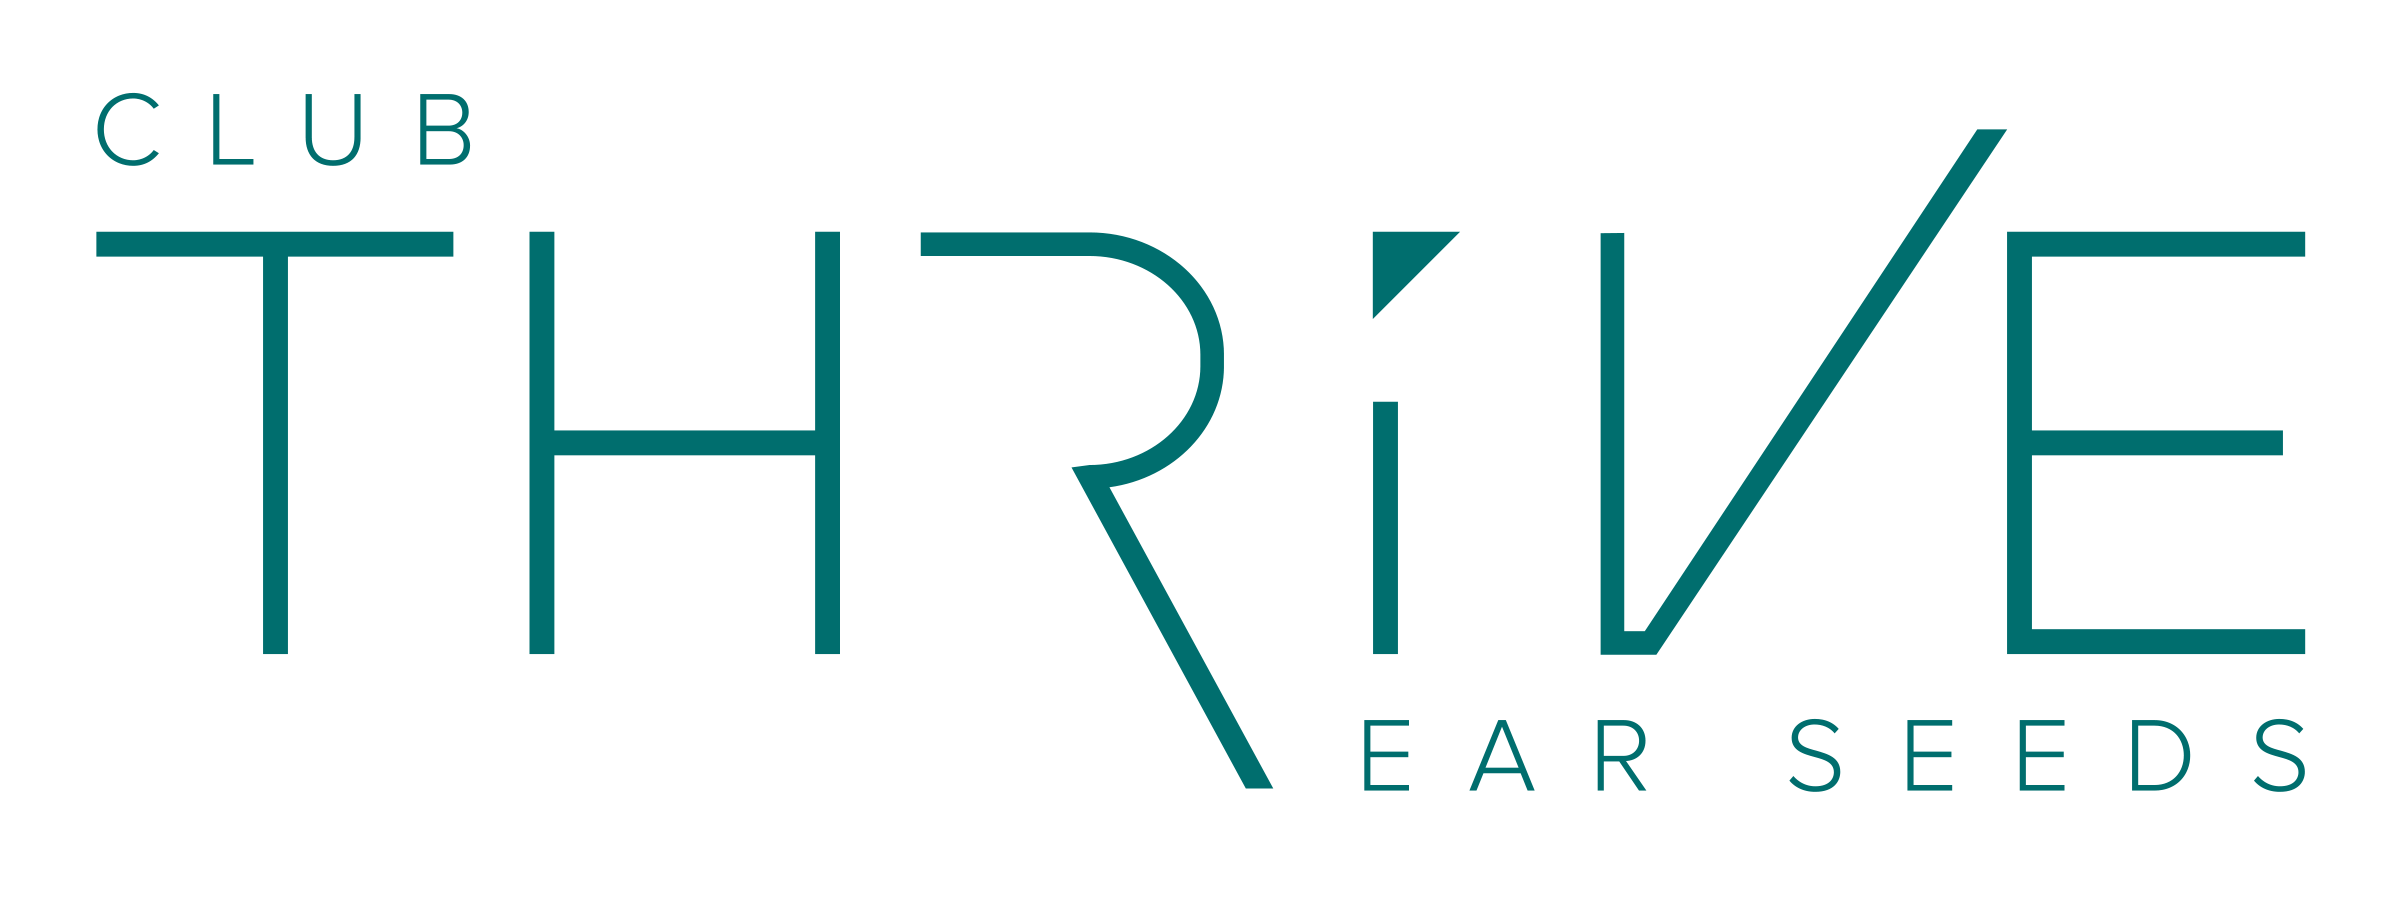 Thrive Ear Seeds logo